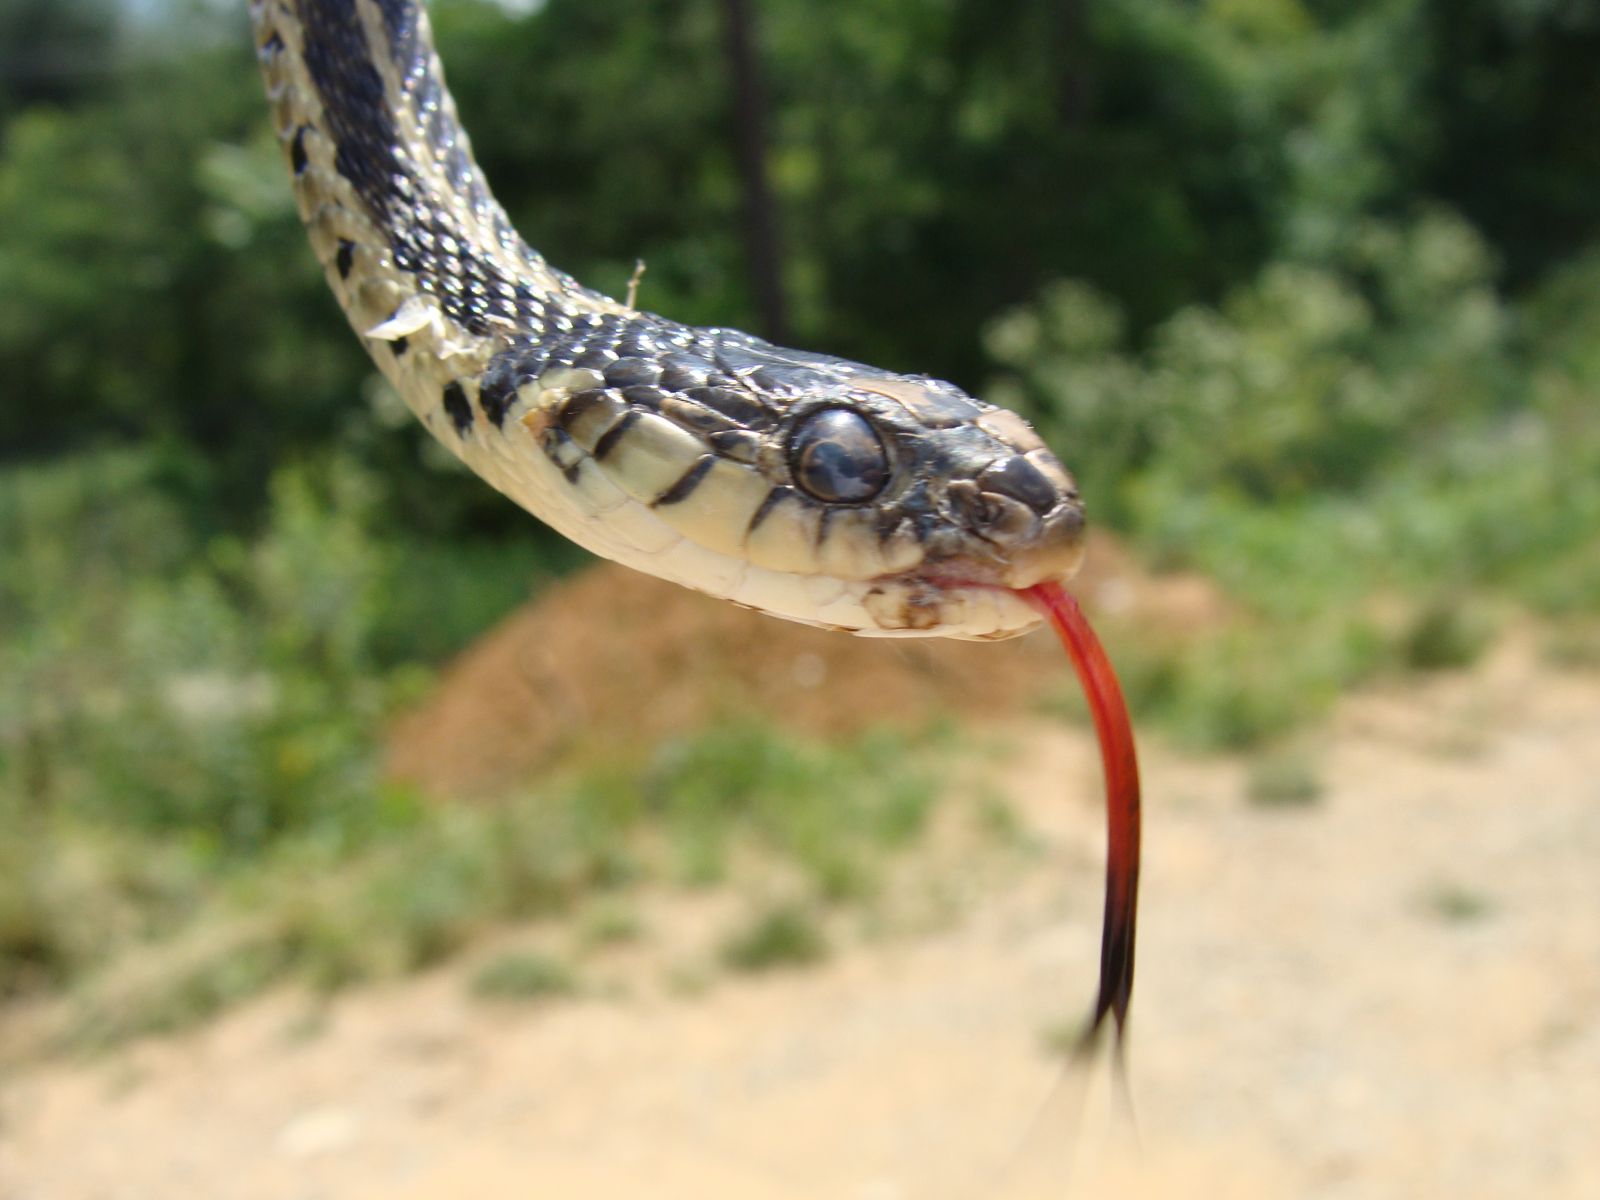 Chesapeake Snake Removal